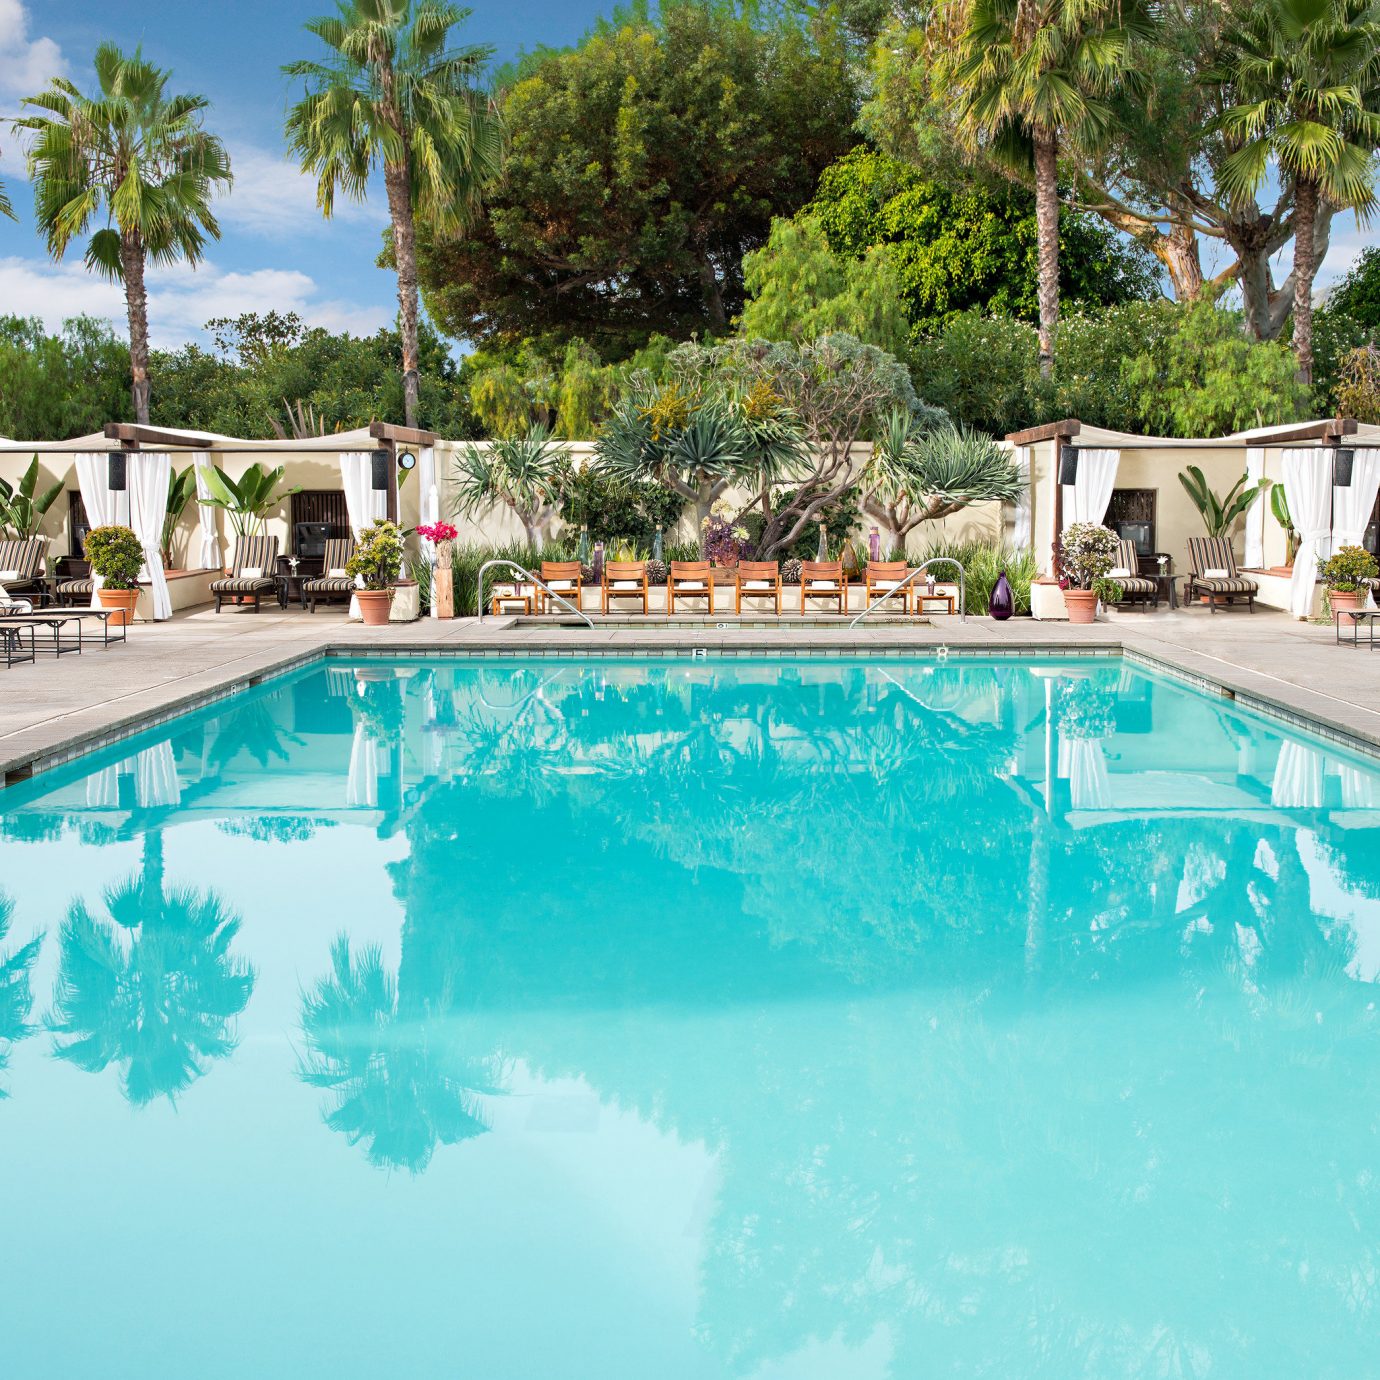 Exterior Hotels Pool Resort Trip Ideas tree swimming pool property leisure Villa resort town backyard swimming